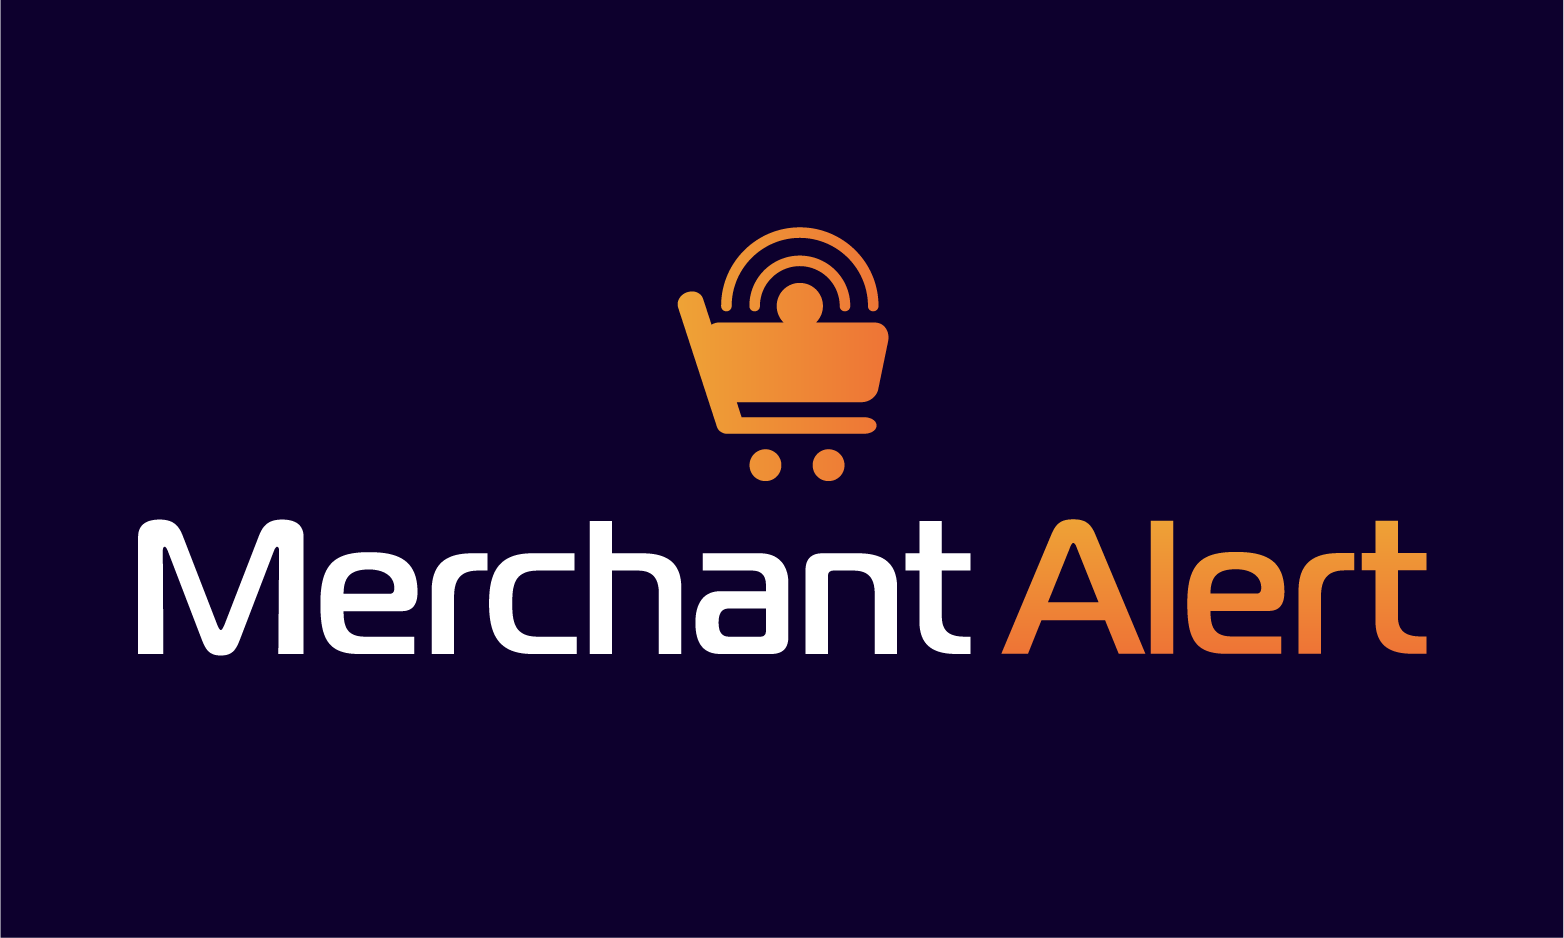 MerchantAlert.com - Creative brandable domain for sale